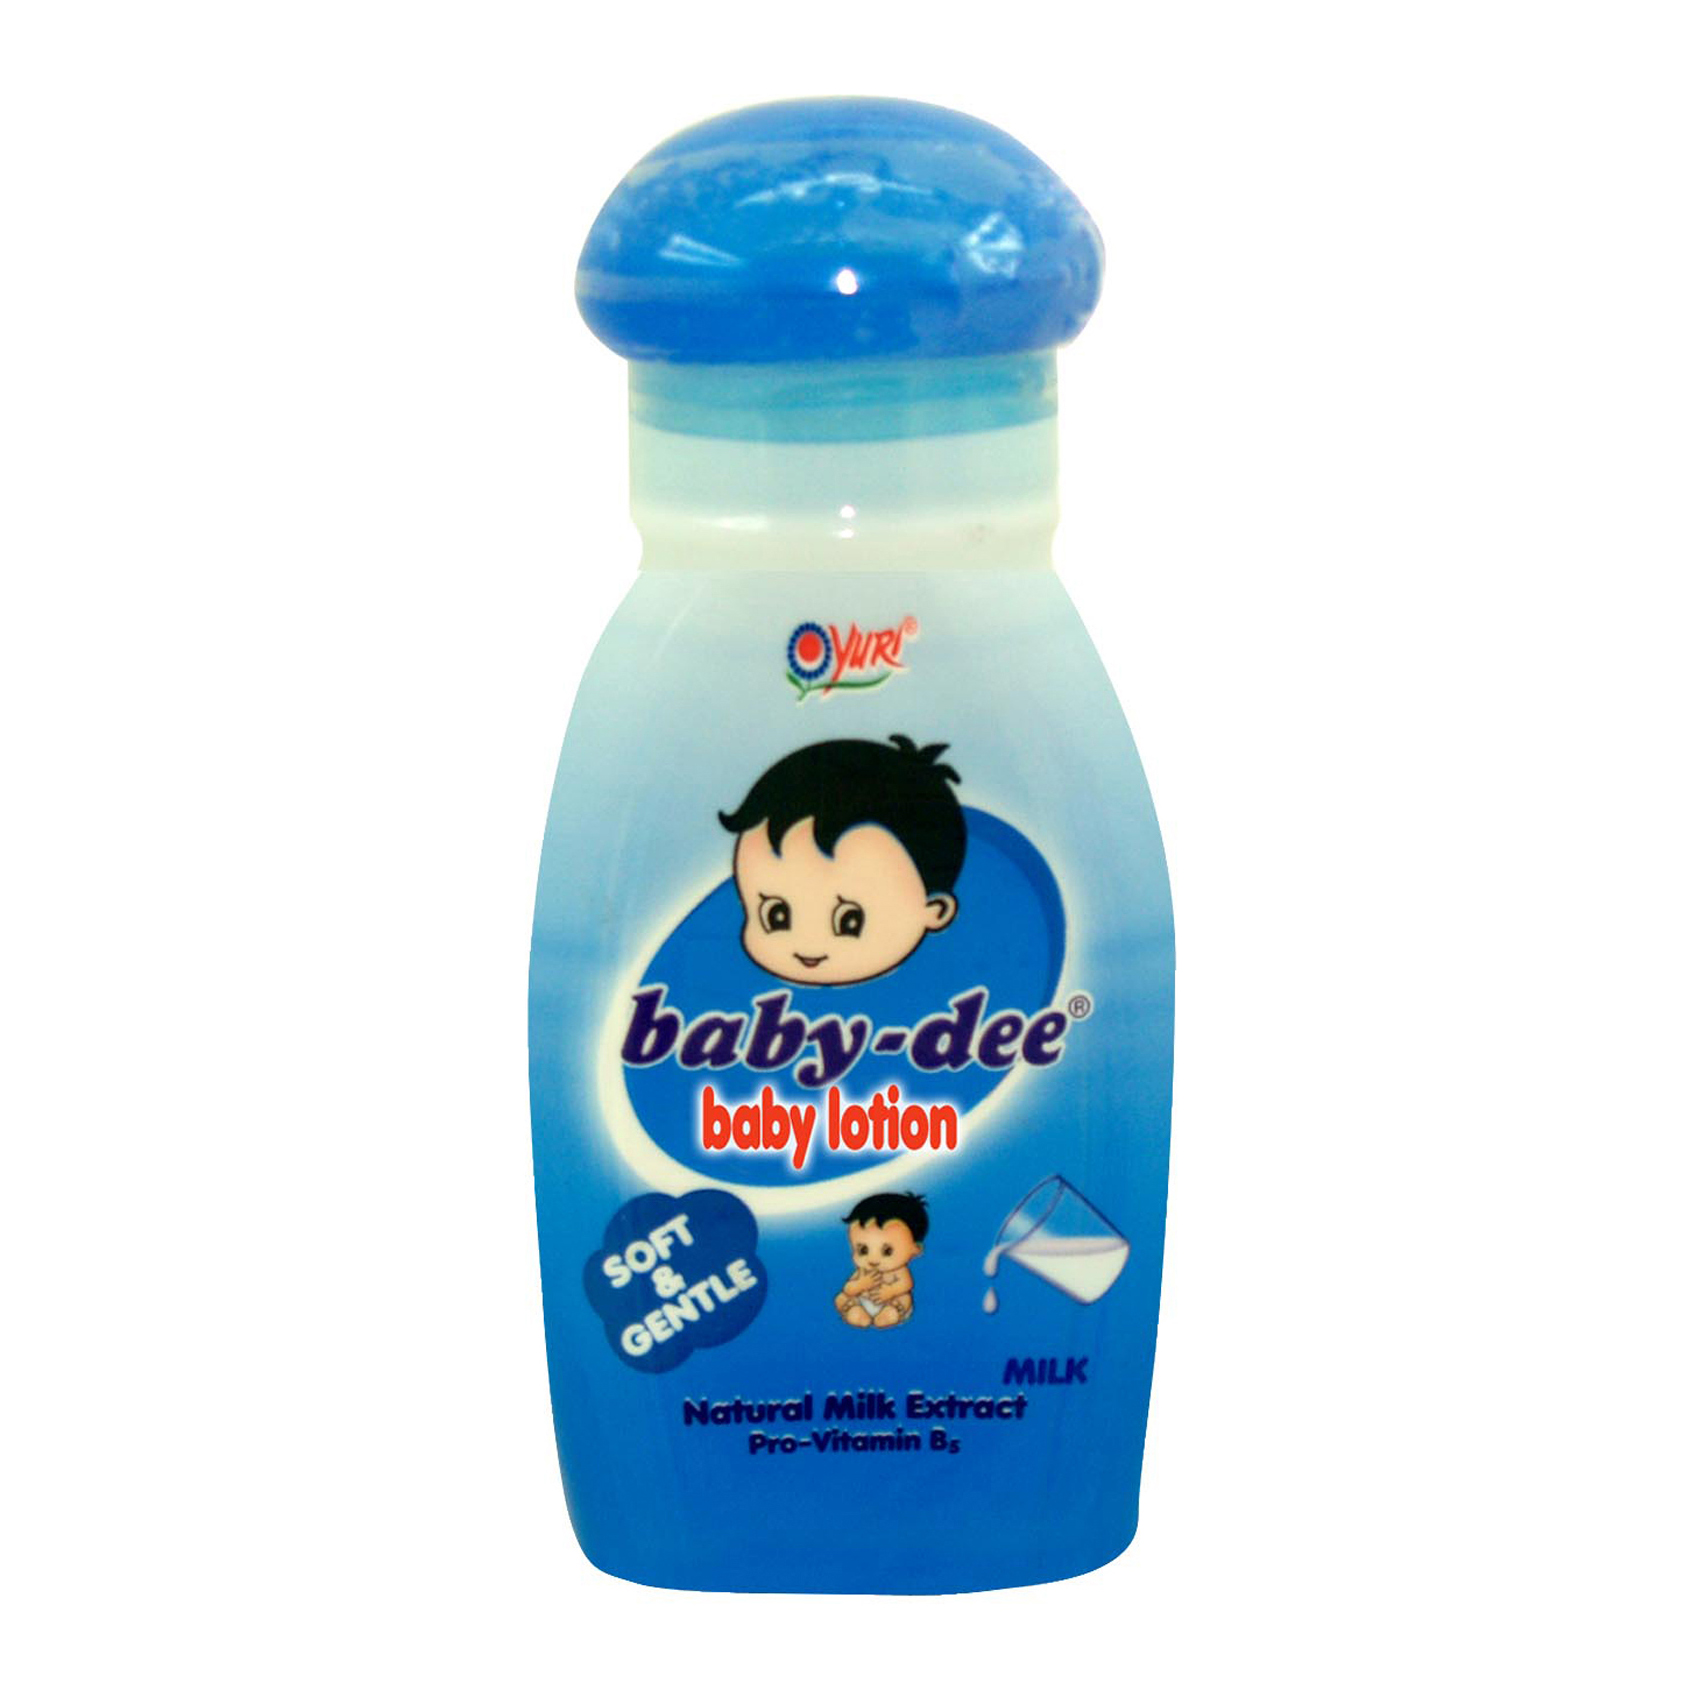  Baby  Dee Baby  Lotion  Milk 50ml 24 btl Gogobli